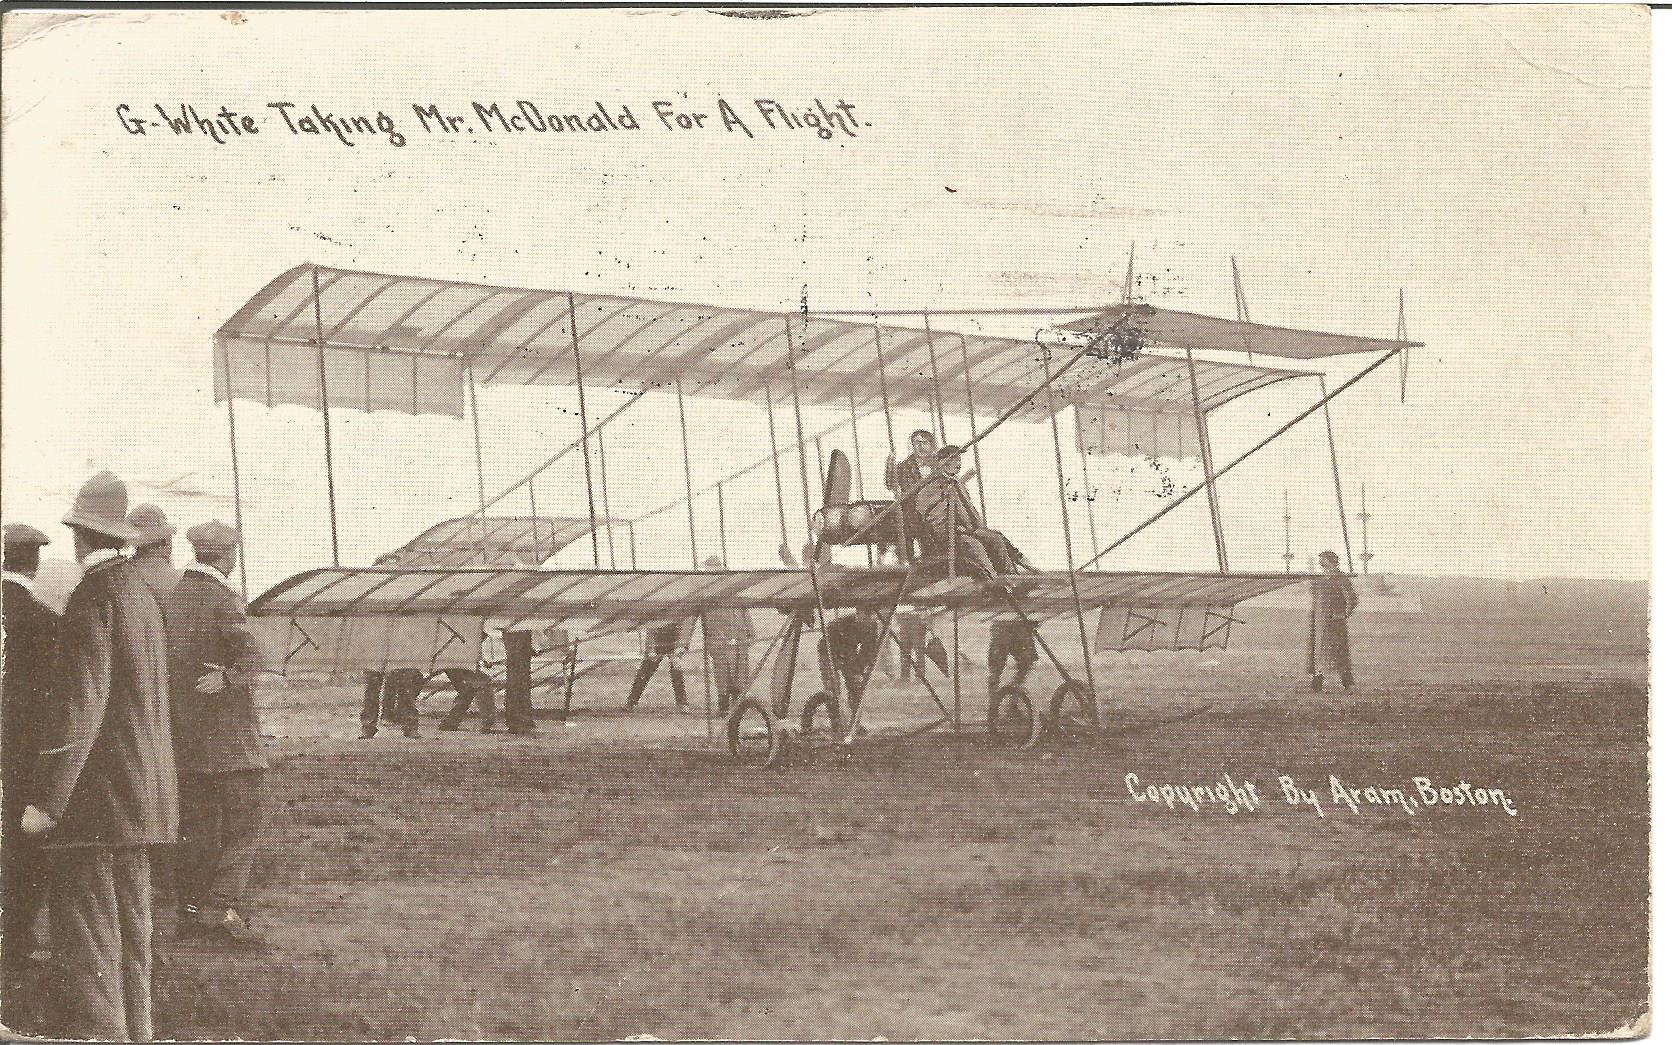 1910 G White taking Mr MacDonald for a flight vintage postcard, Historical interest in senders - Image 2 of 2